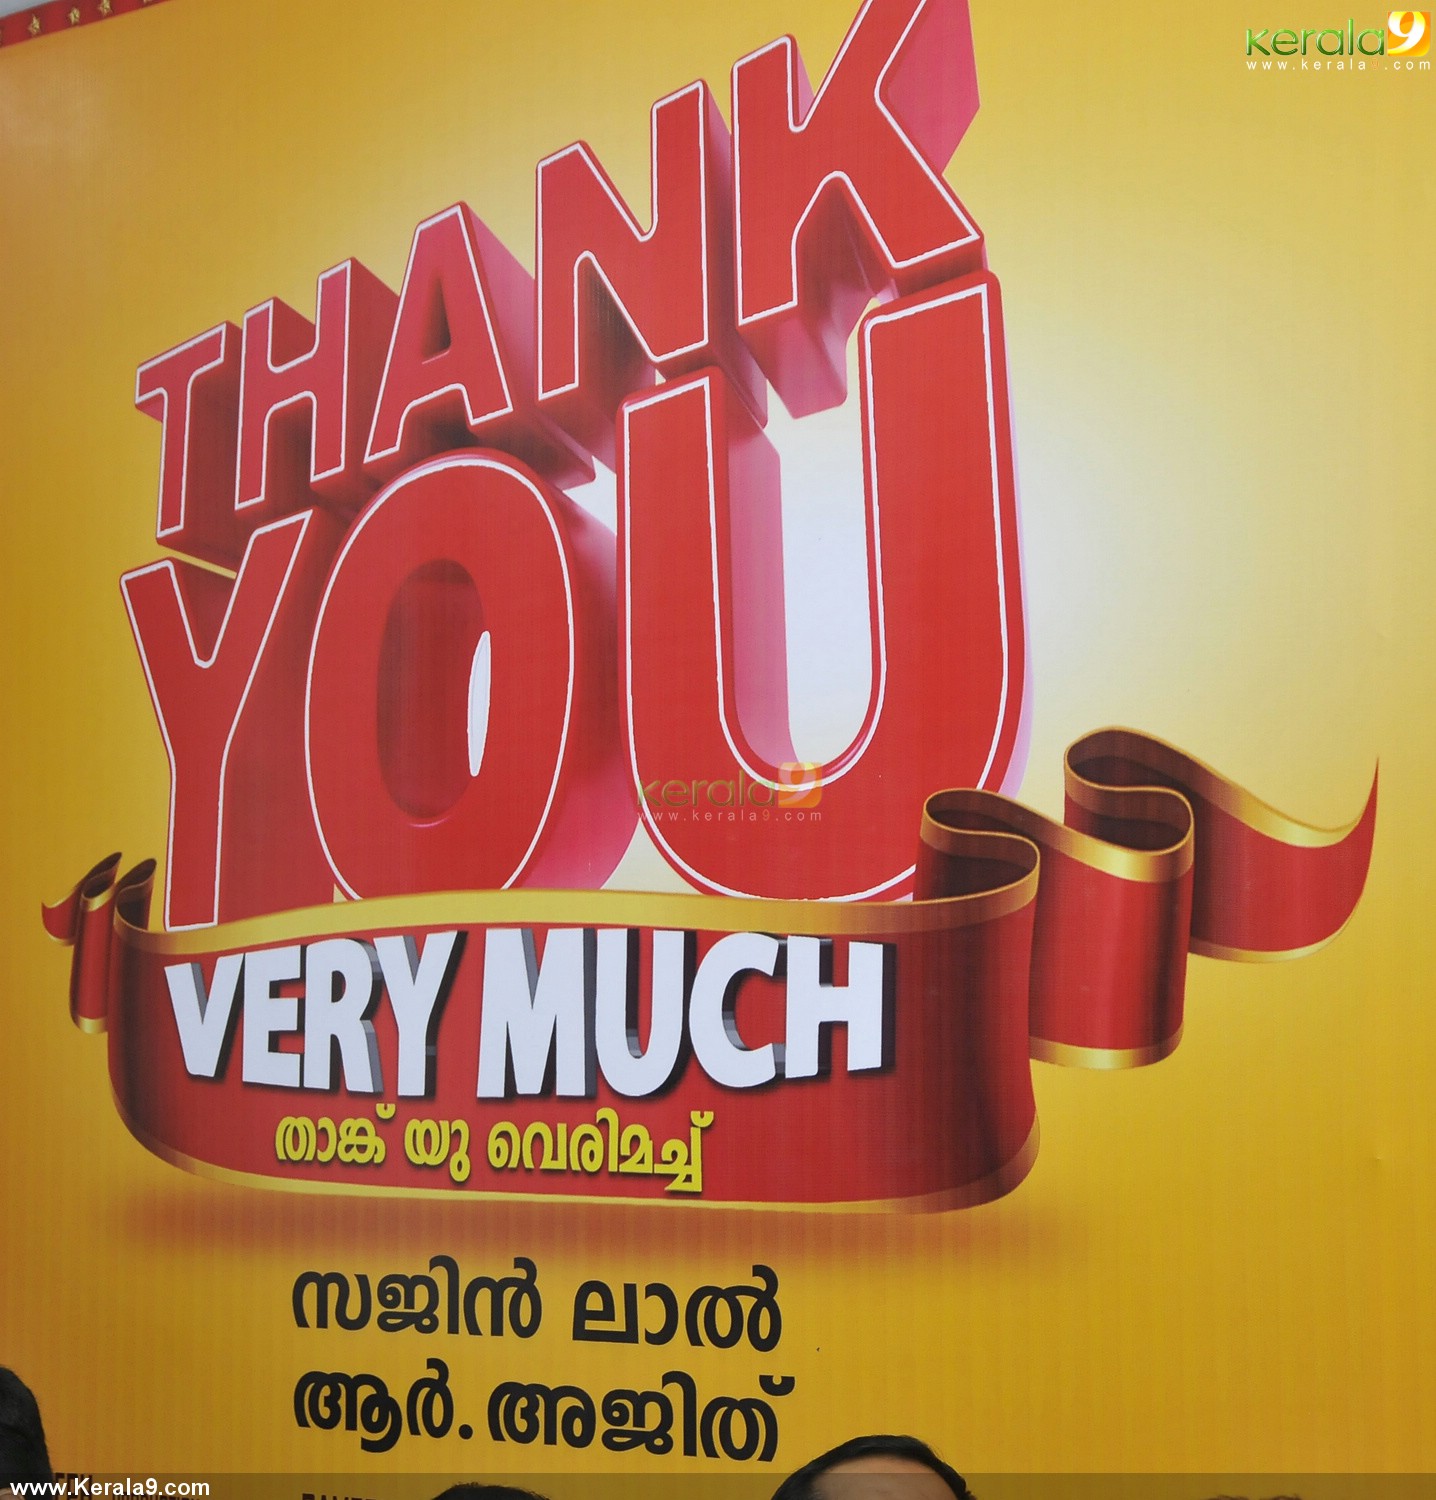 in Thank You malayalam movie free